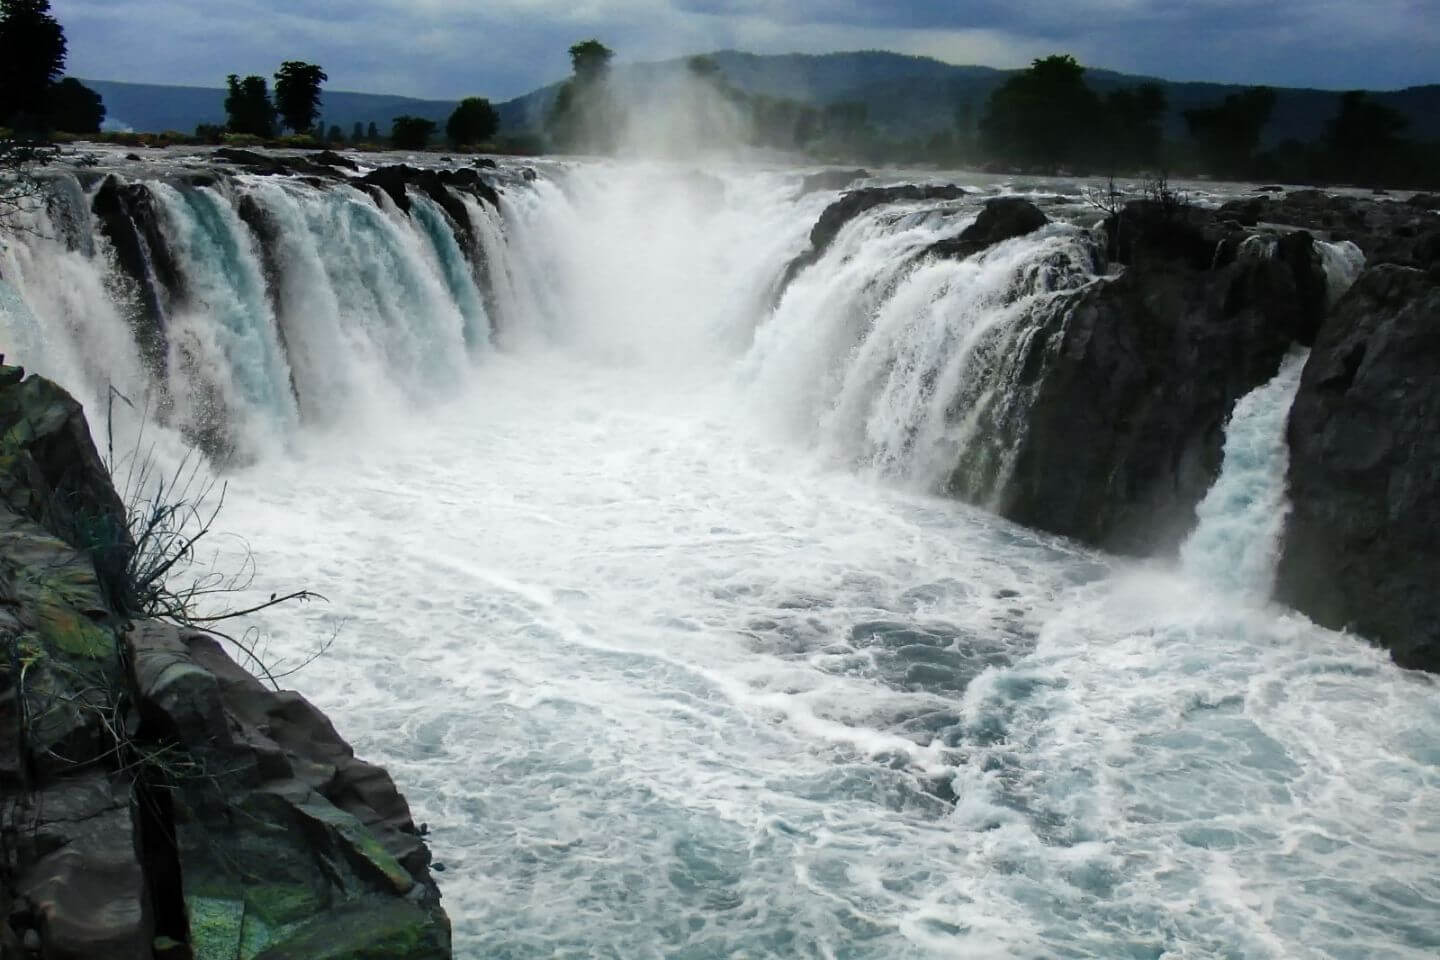 Hogenakkal waterfalls best falls to visit near Bengaluru with family and kids within 200 km